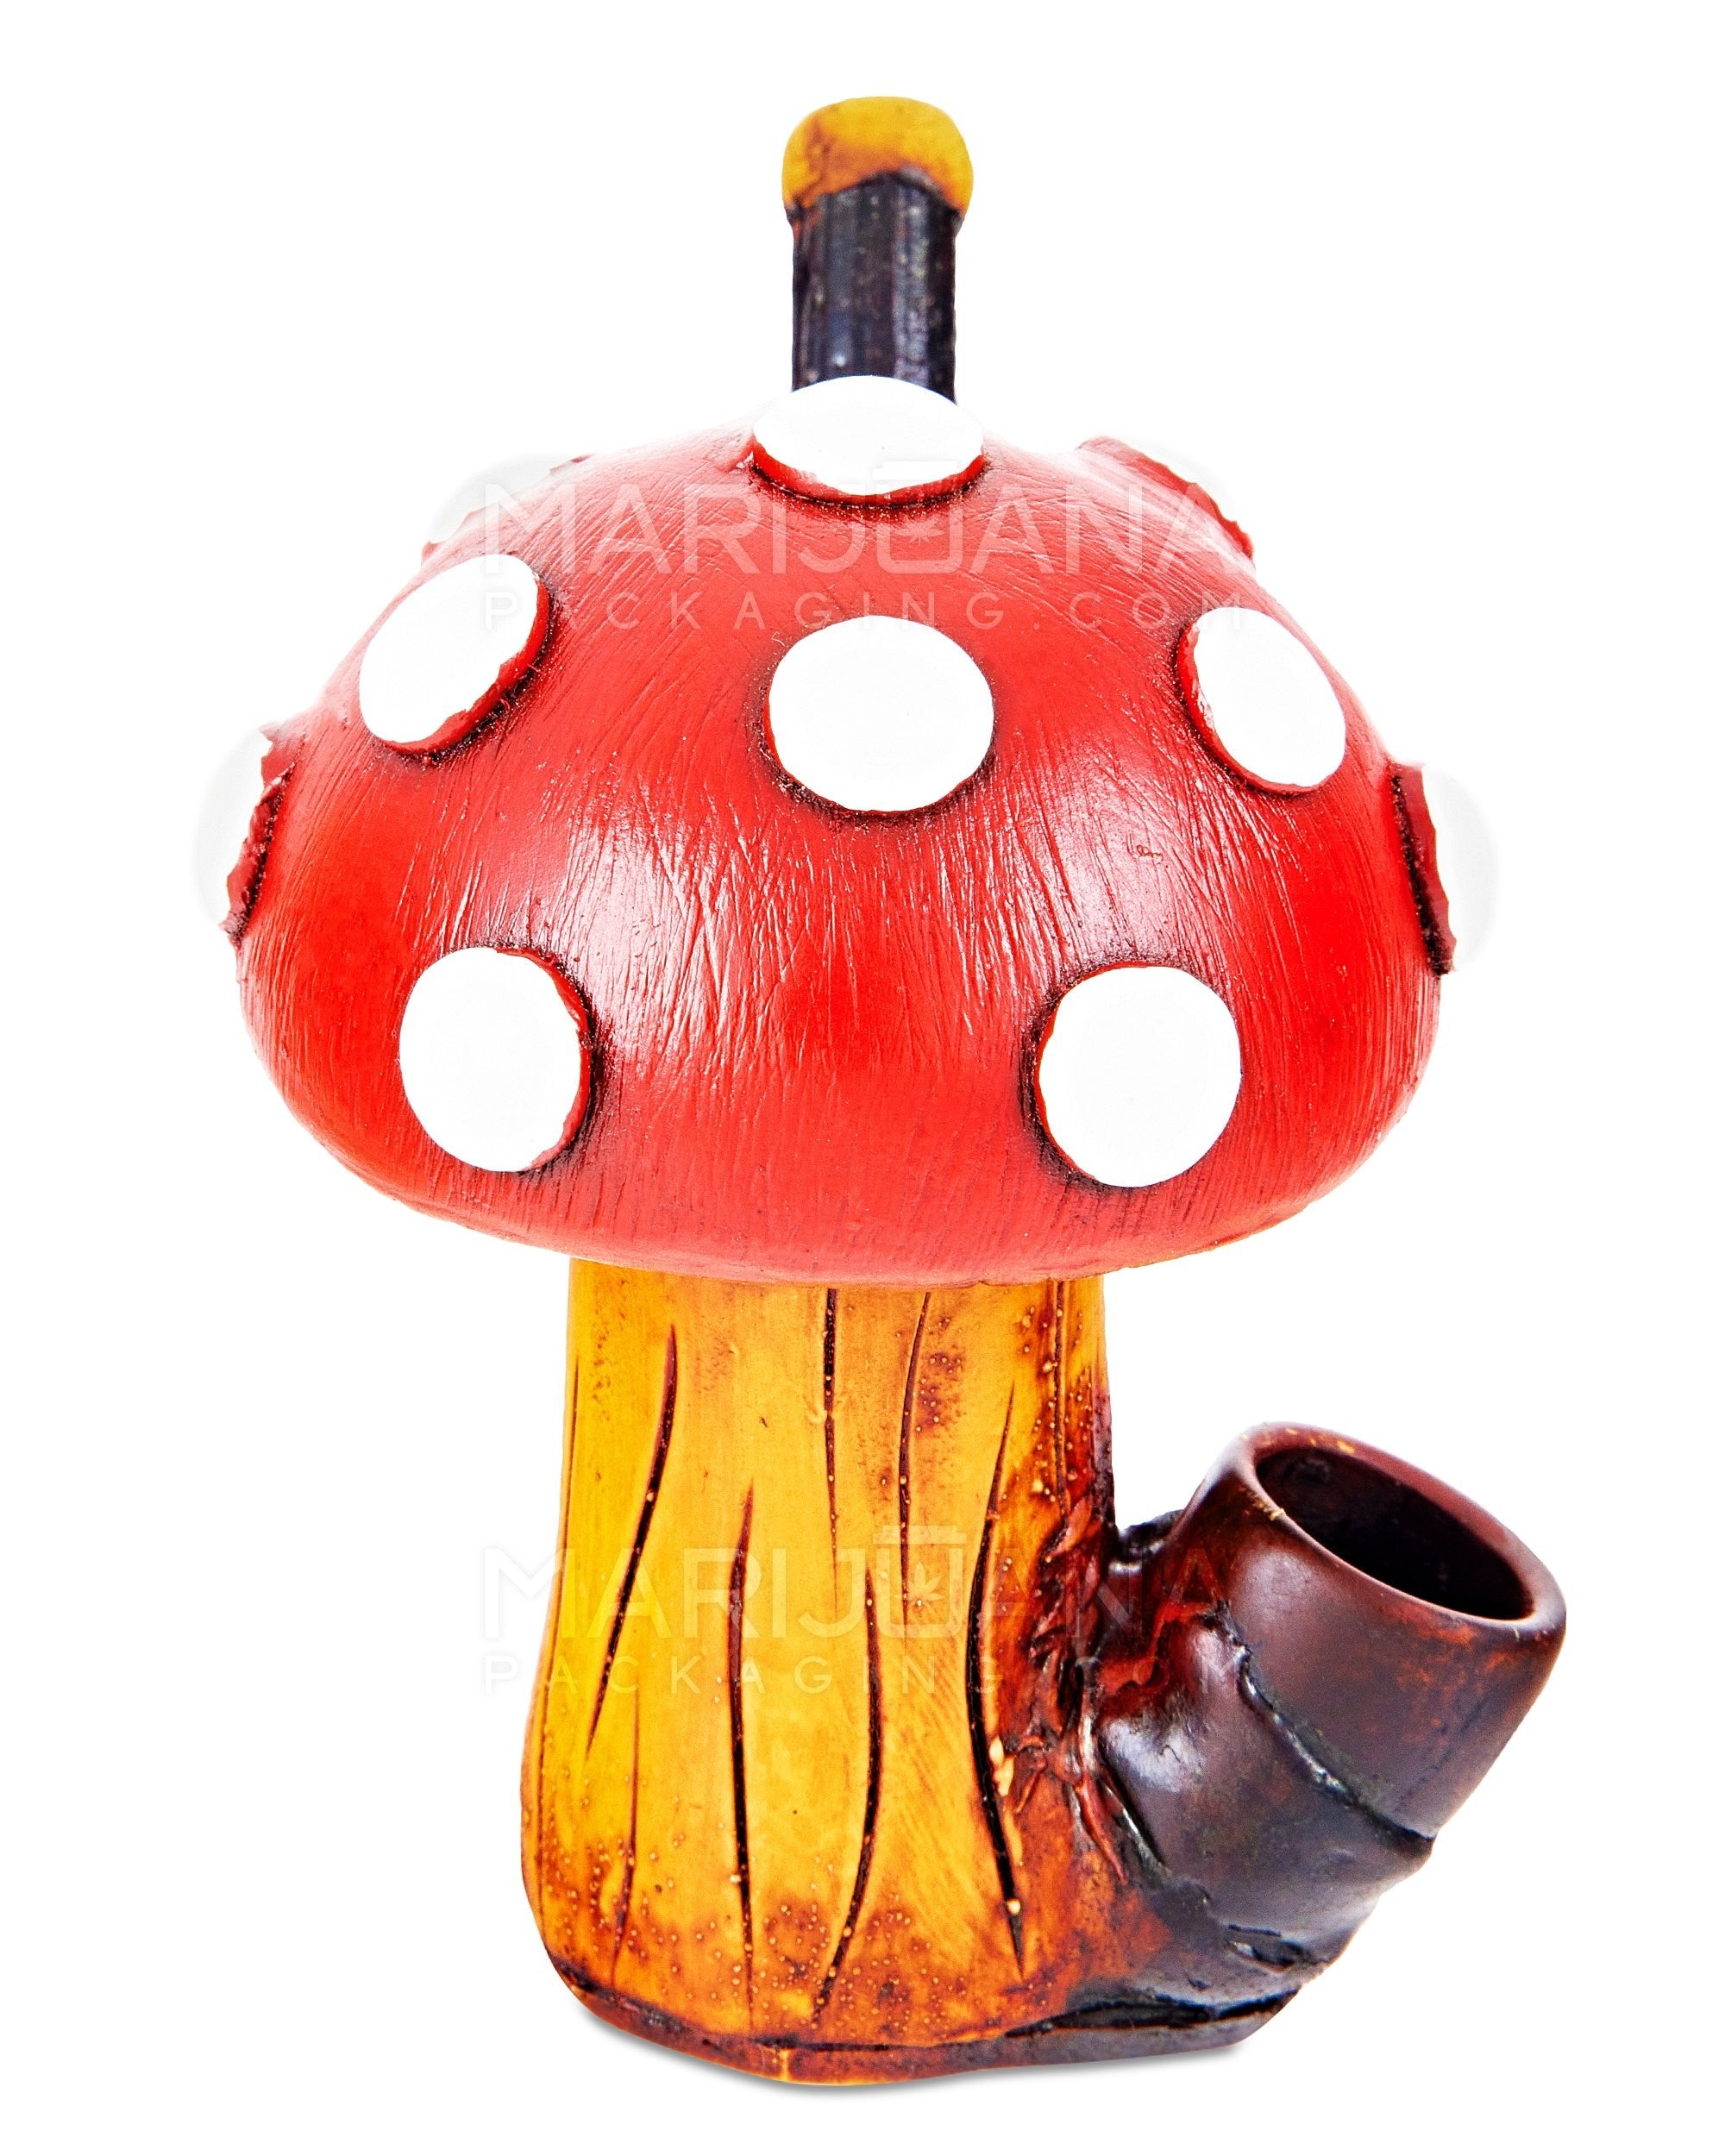 Mushroom Wood Pipe 3 inch Tall - Wood Bowl - Red